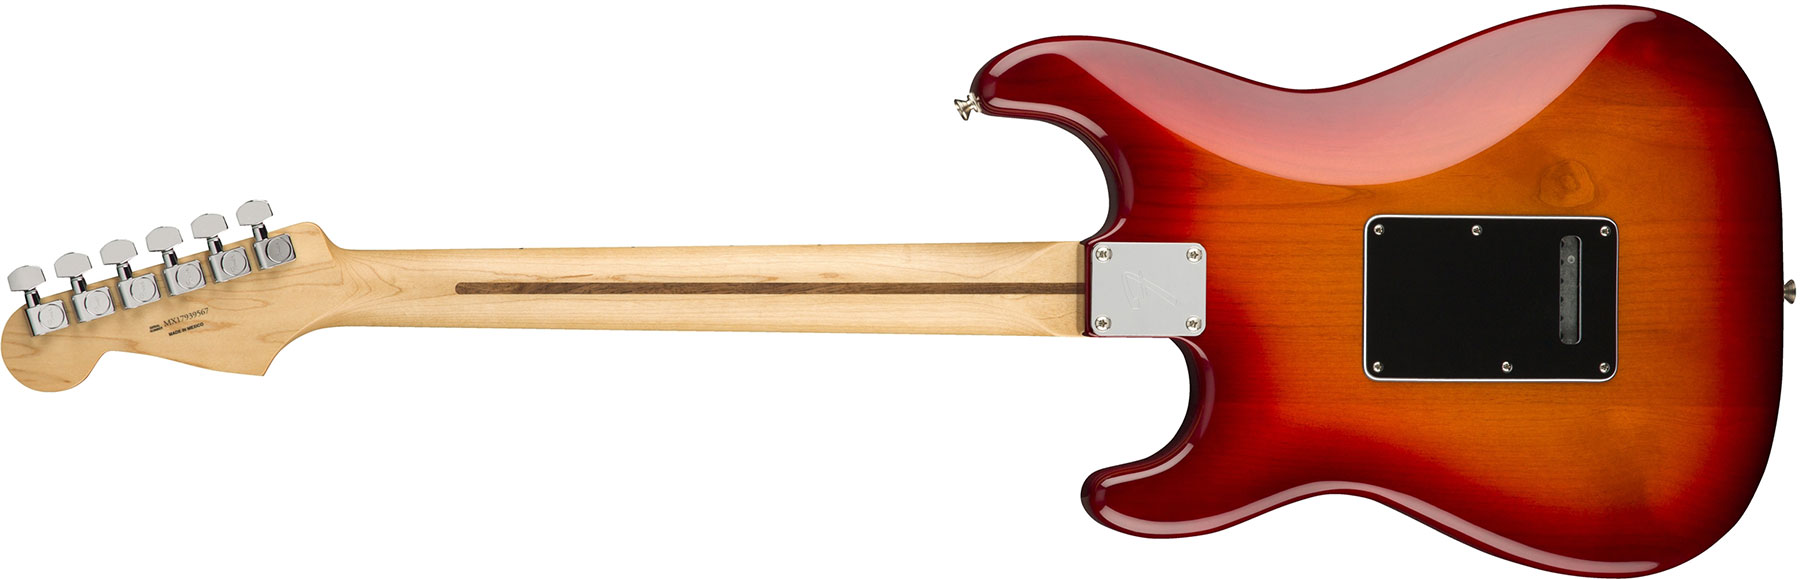 Fender Strat Player Plus Top Mex Hss Mn - Aged Cherry Burst - E-Gitarre in Str-Form - Variation 1